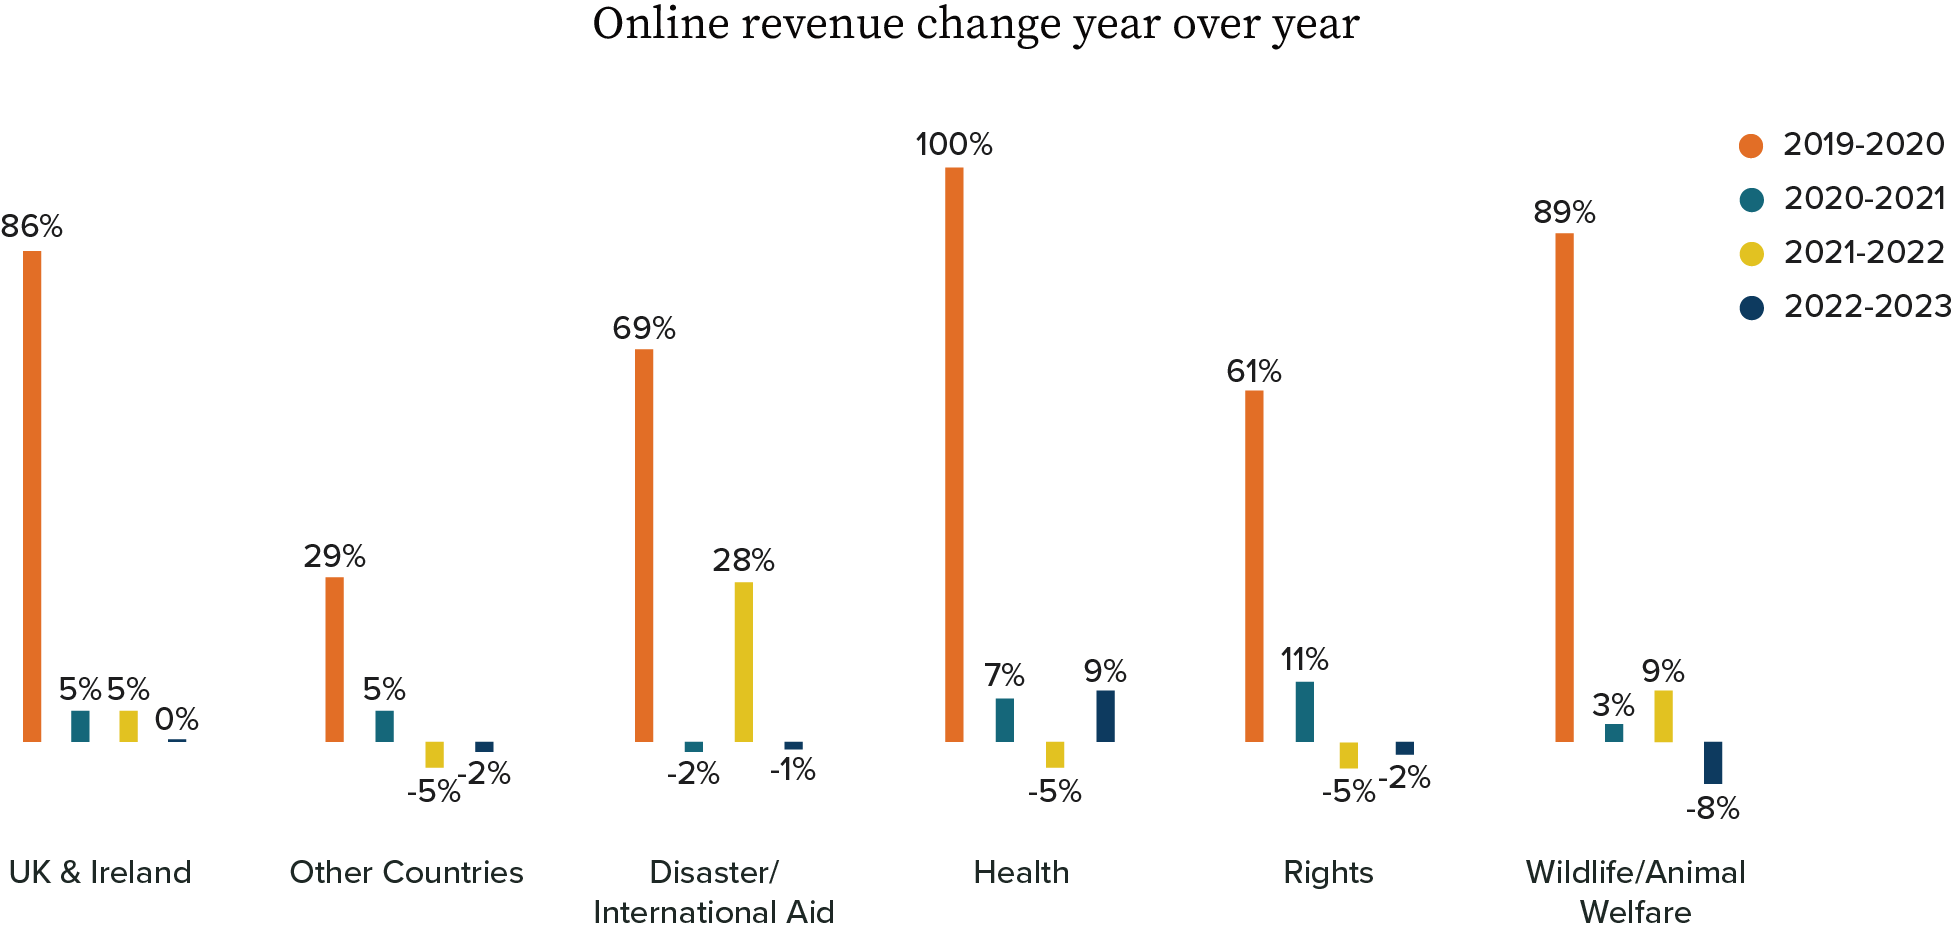 Change in online revenue 2022-23